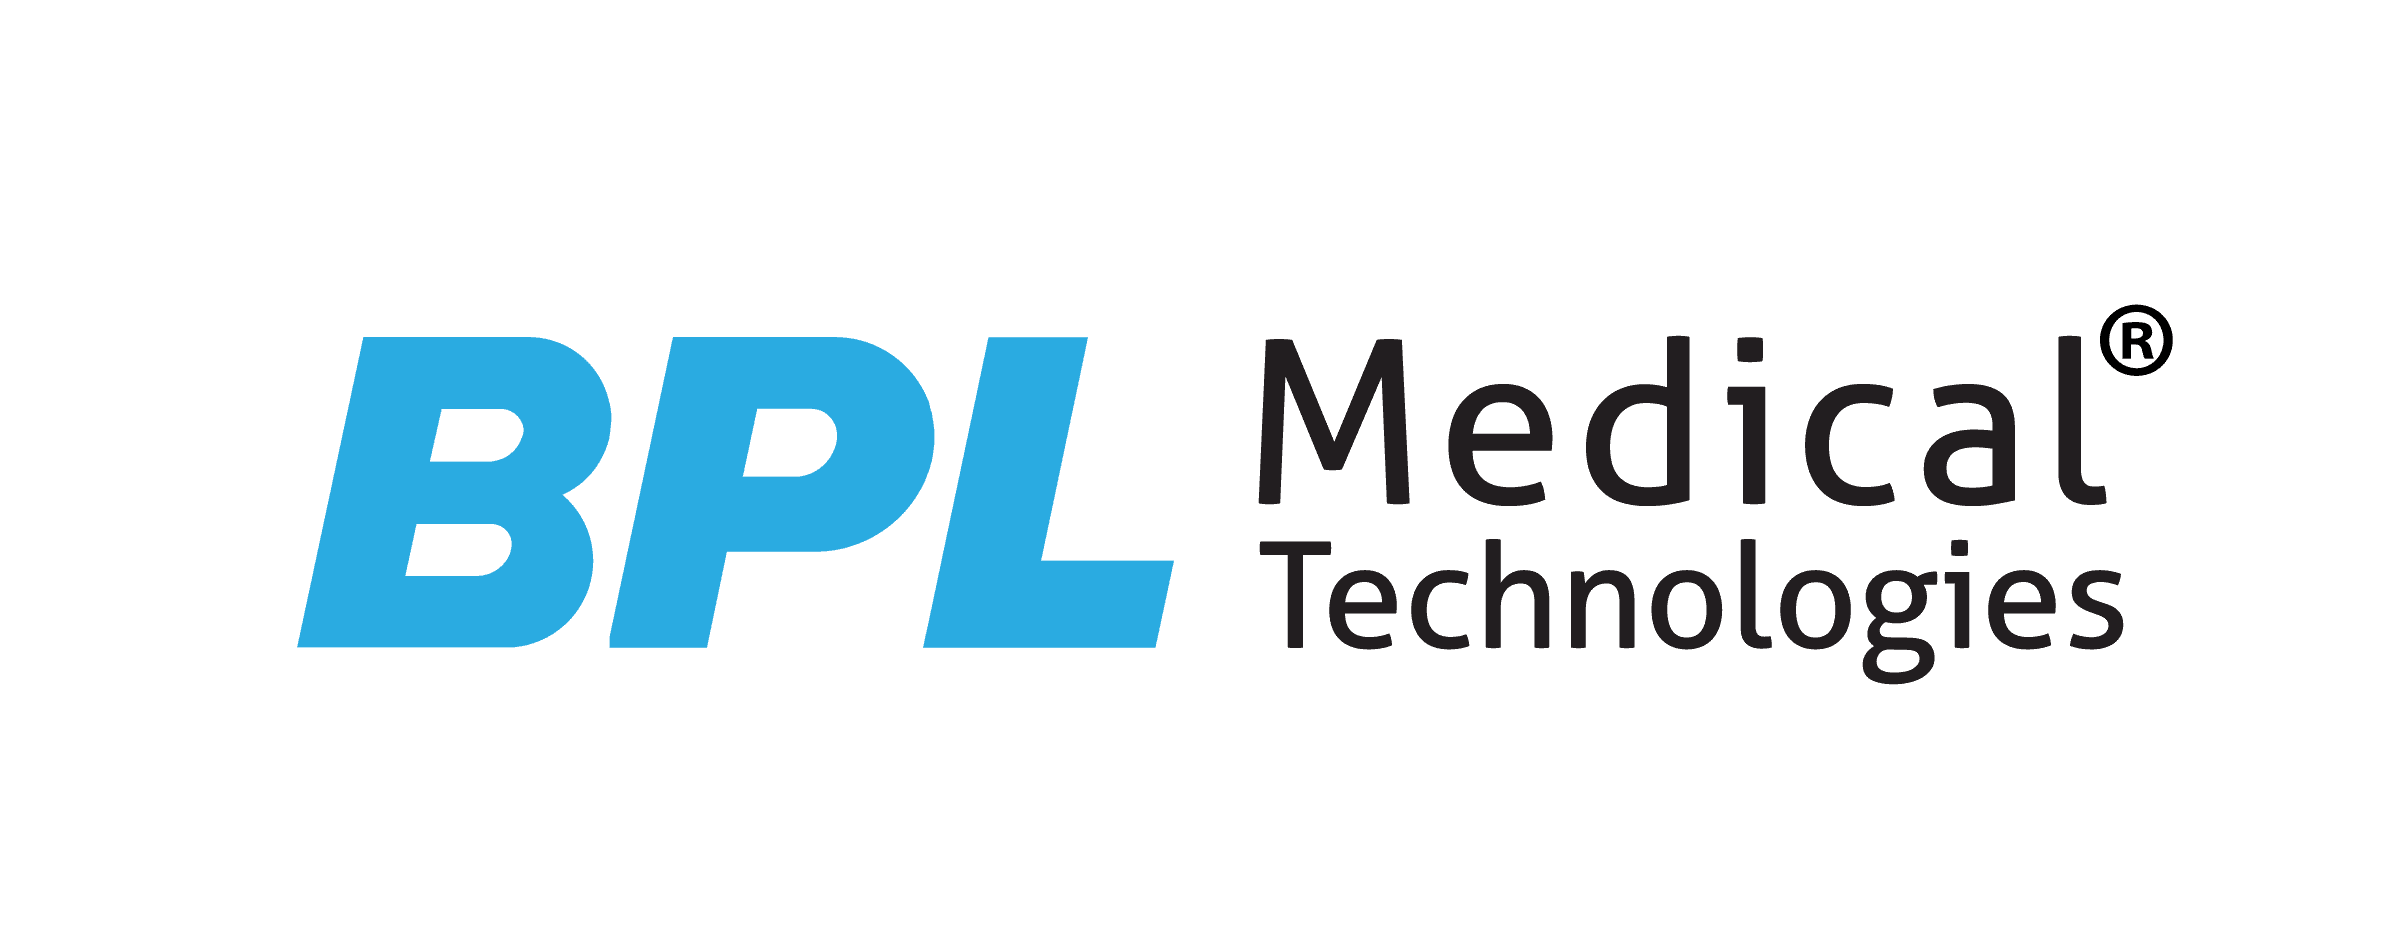 BPL MEDICAL TECHNOLOGIES PVT. LTD.